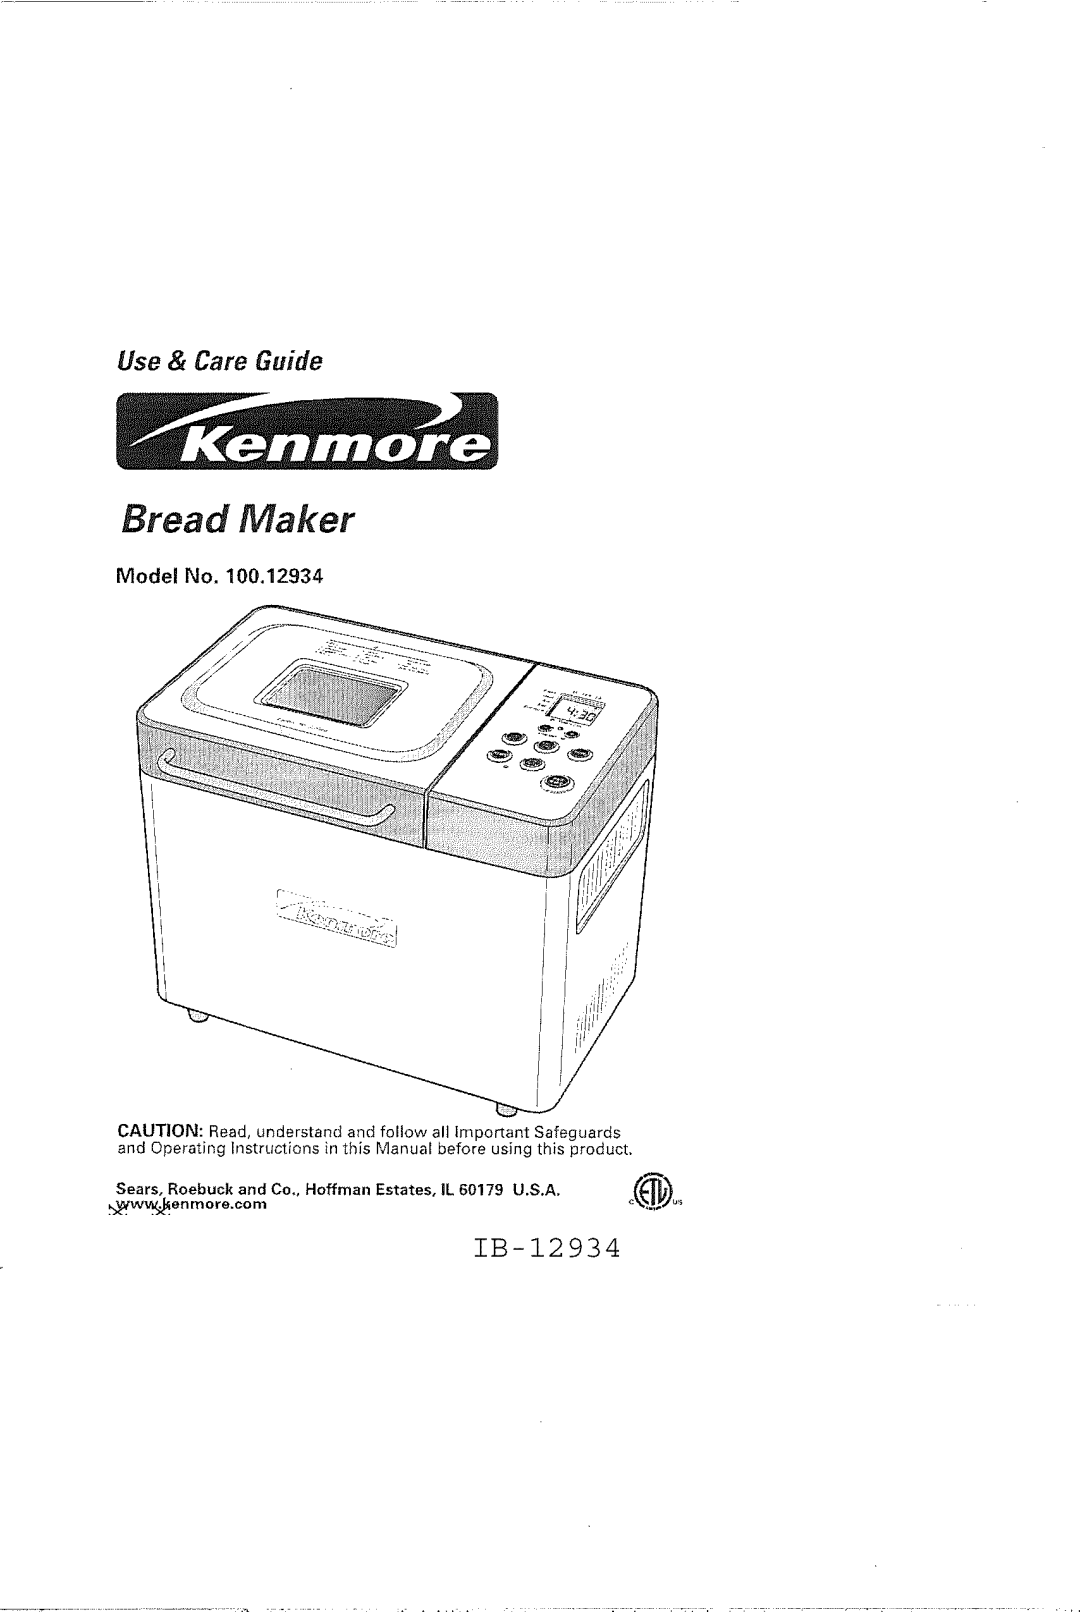 Kenmore 100.12934 manual Bread Maker, Use & Care Guide, IB-12934, Model No 